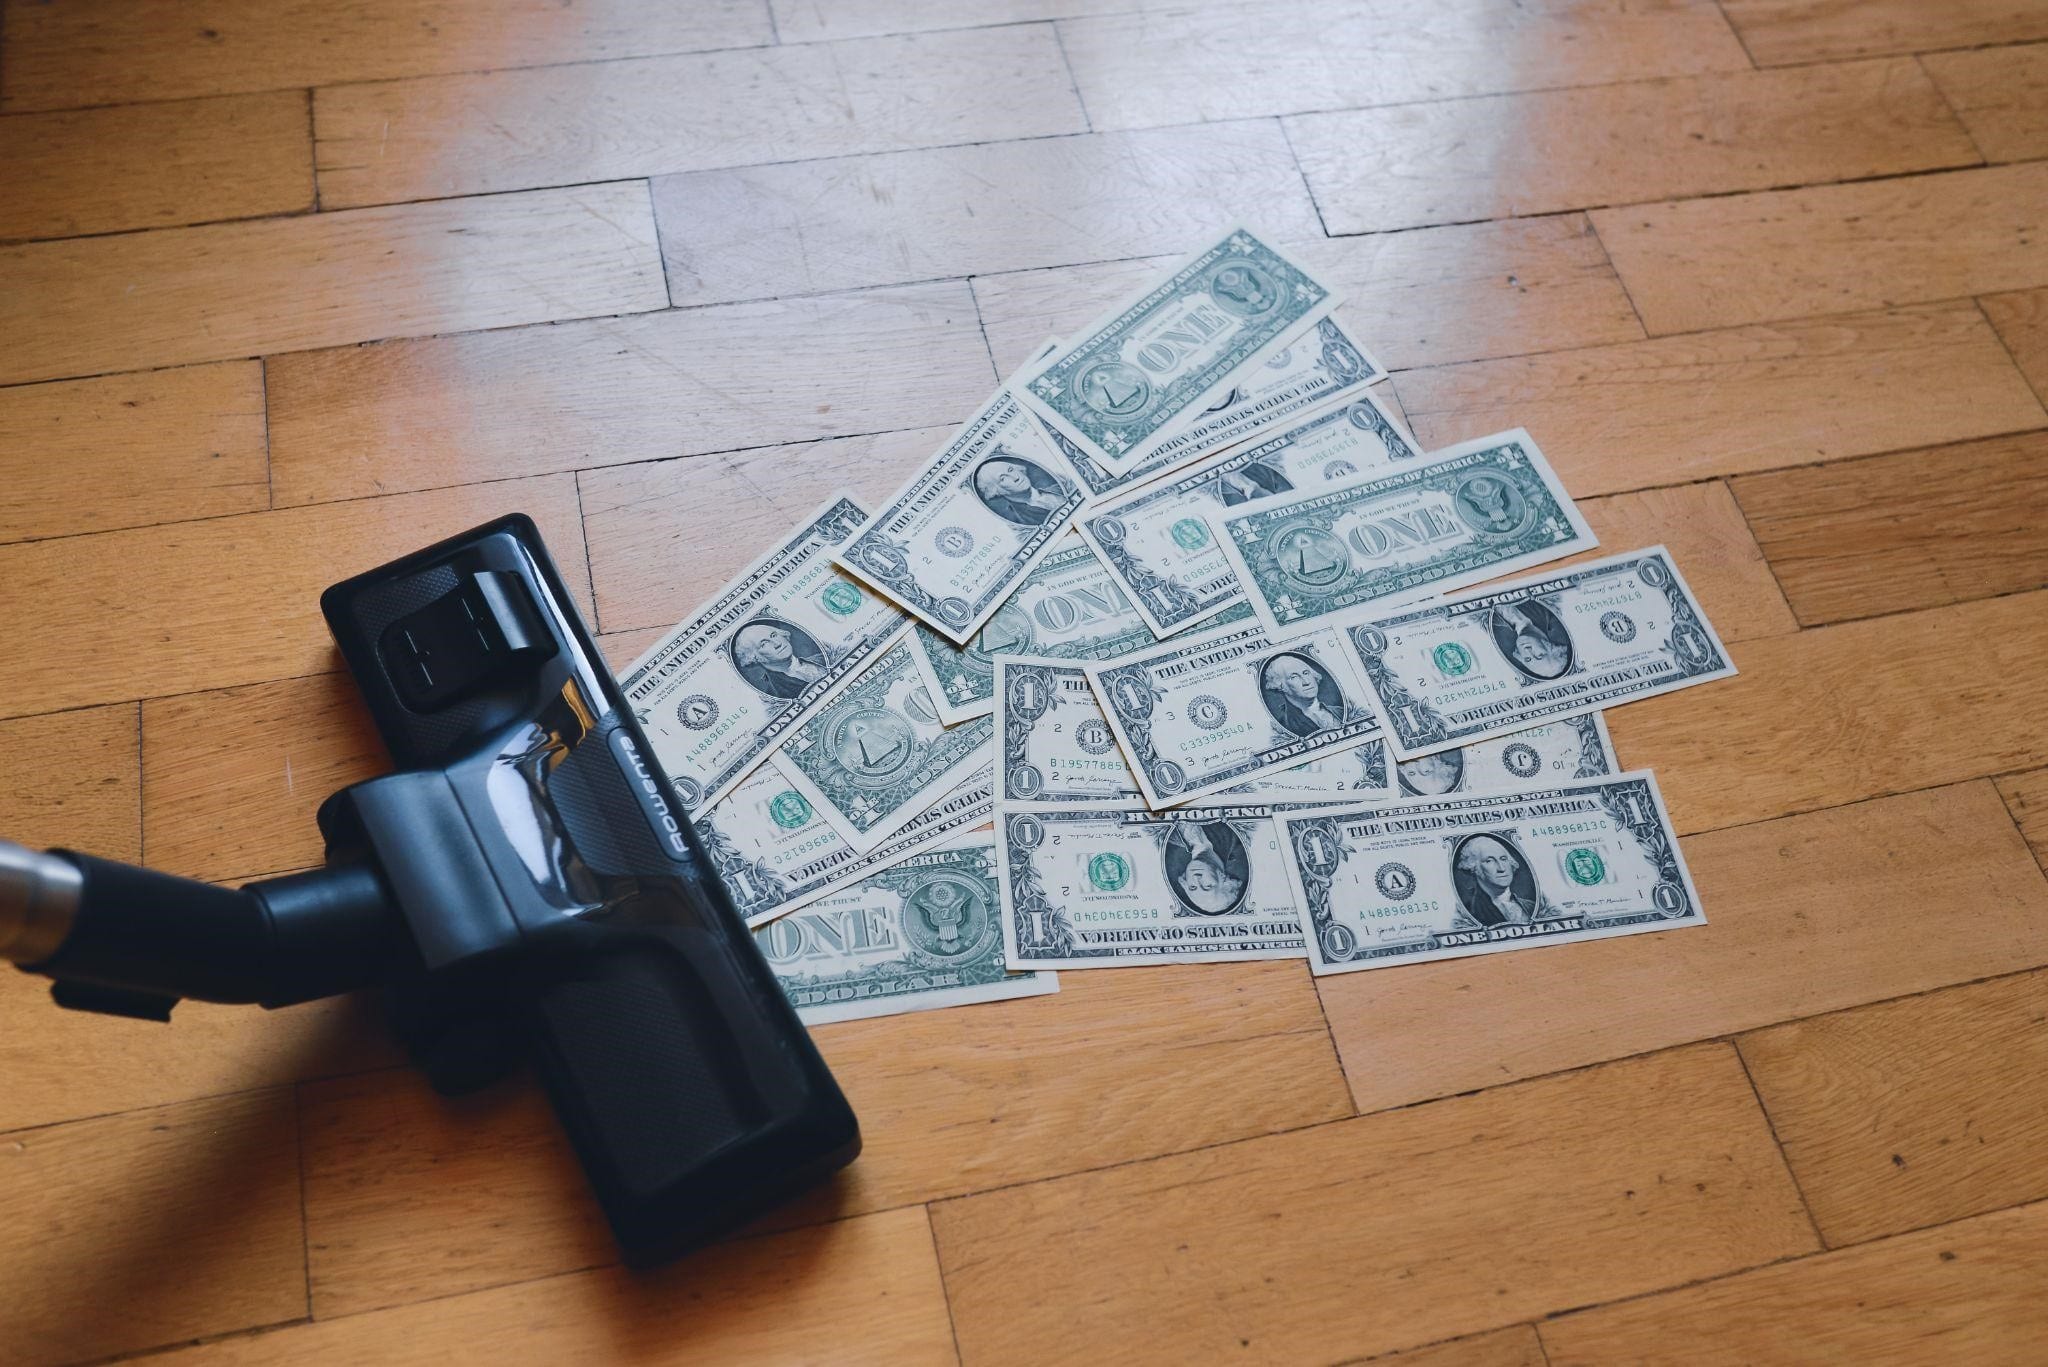 A vacuum cleaner sucking up dollar bills, representing the devaluation of money